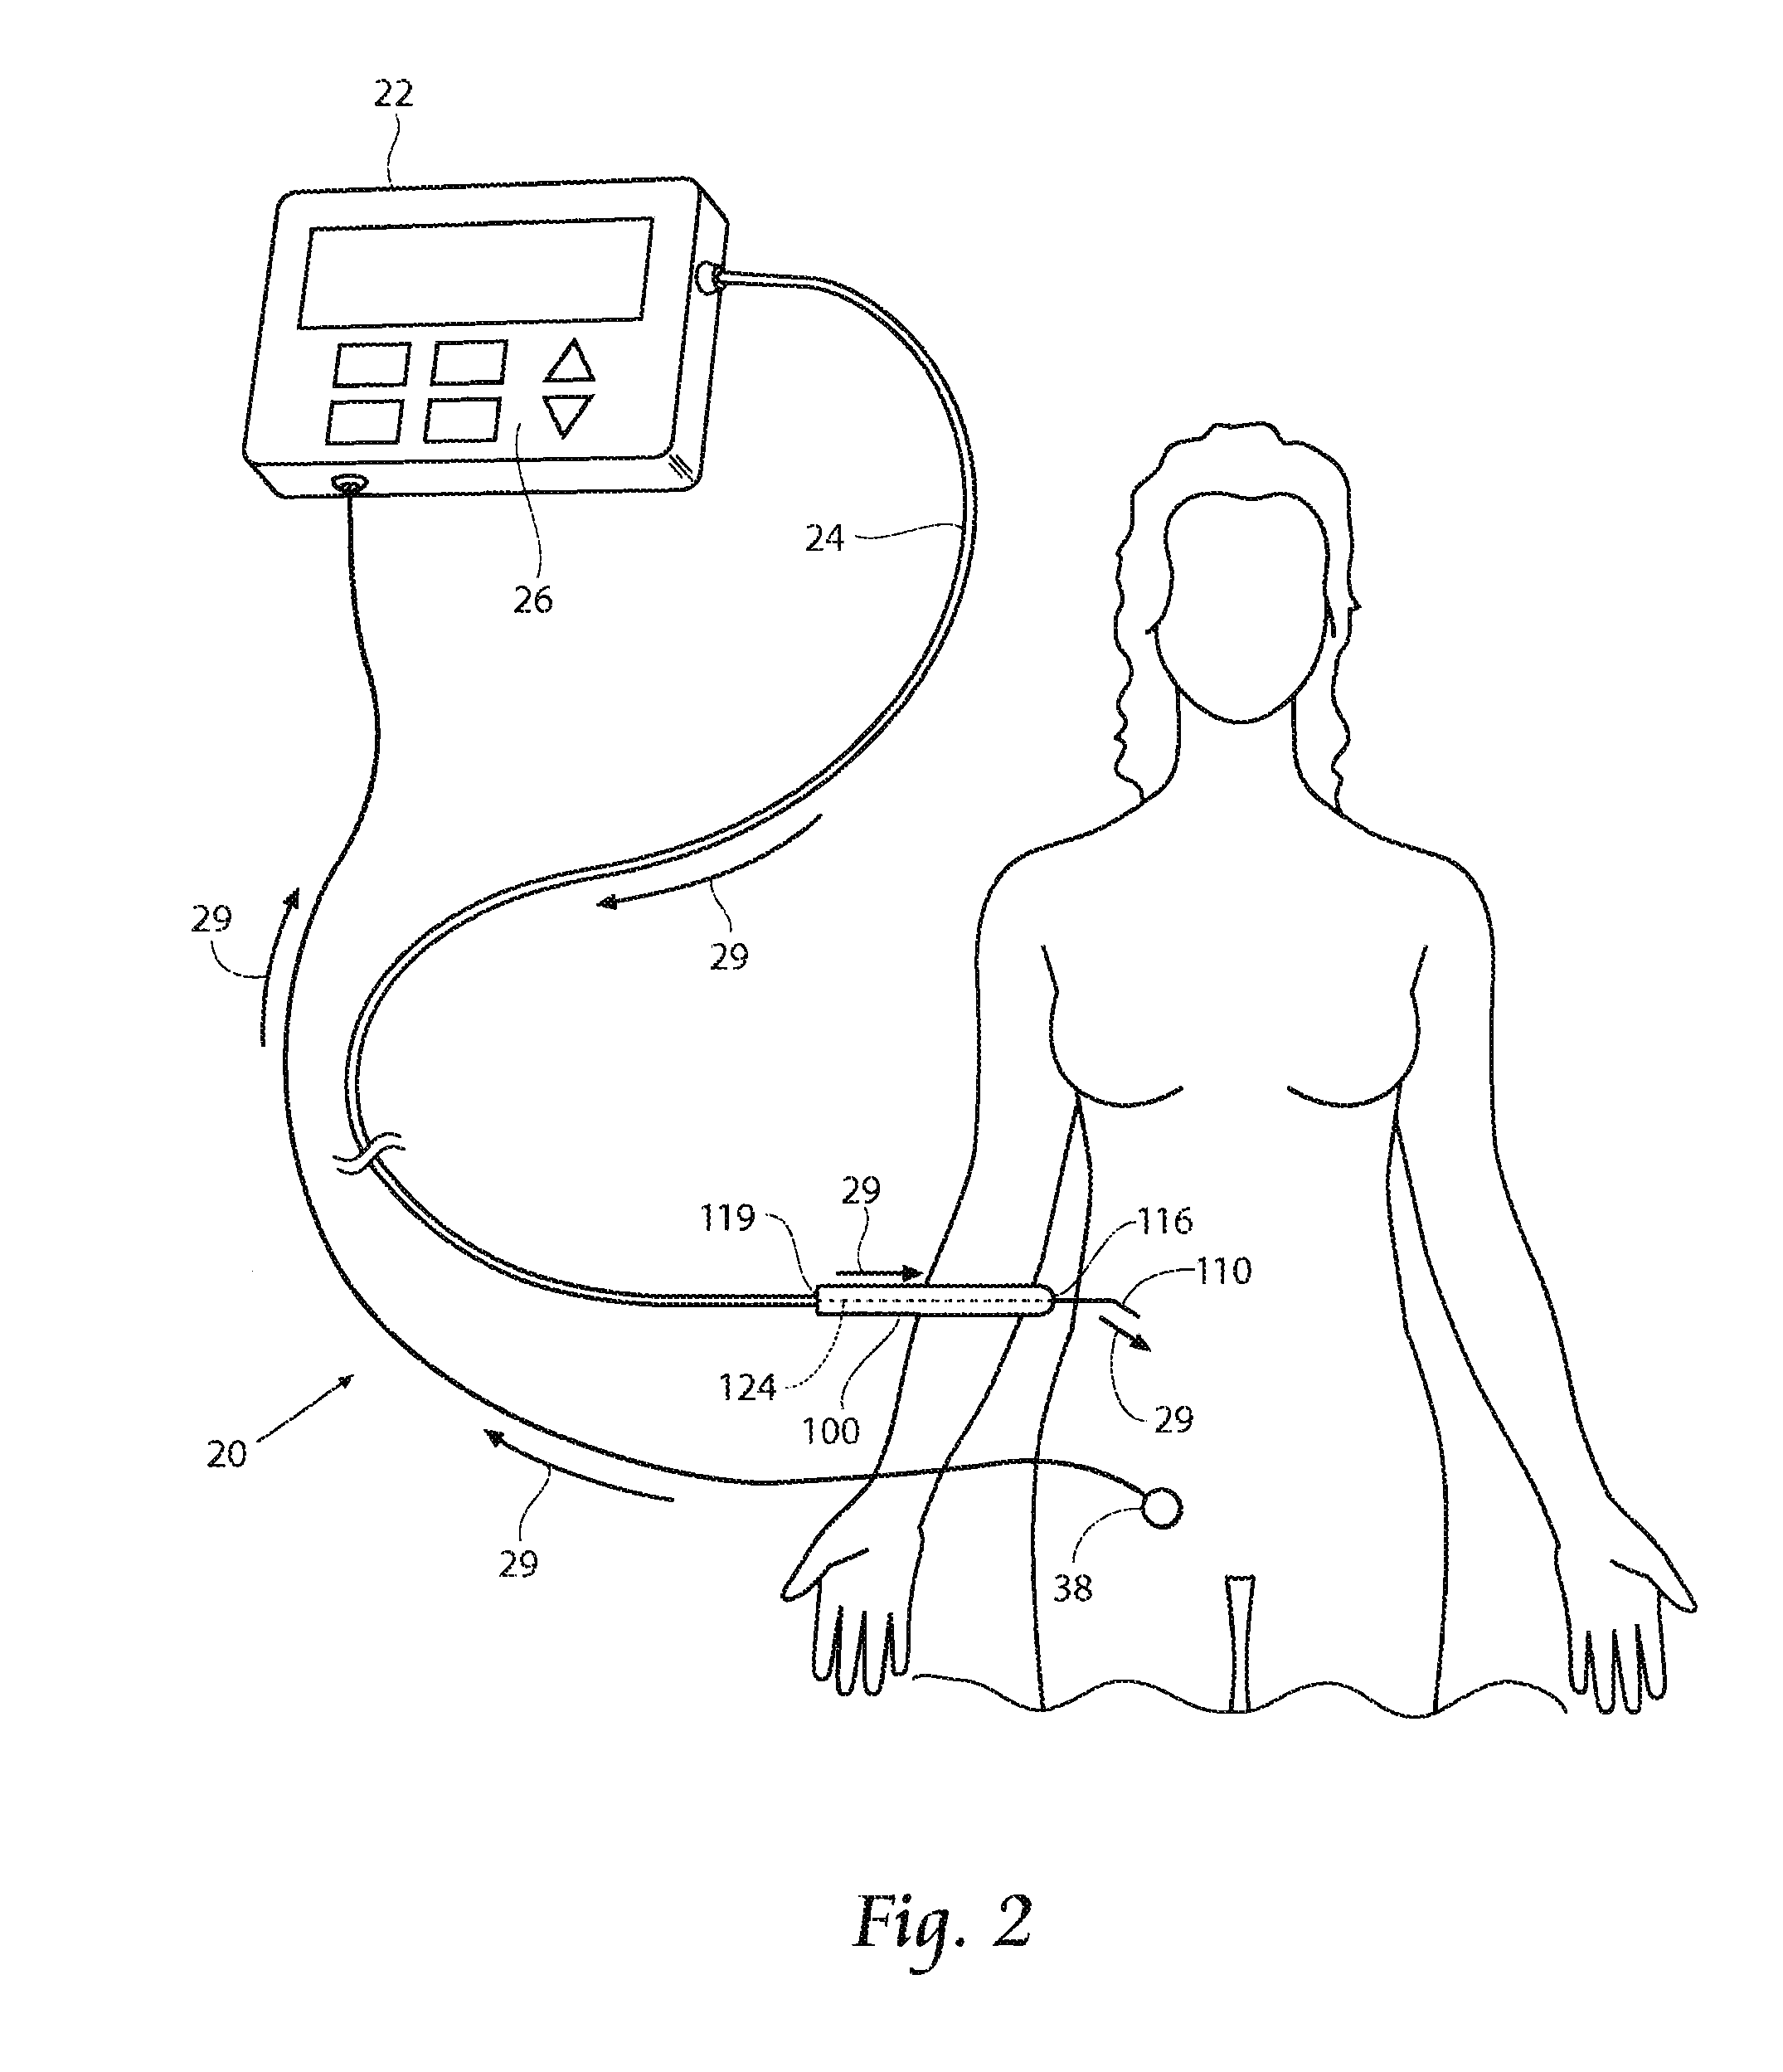 Stimulation device adapter